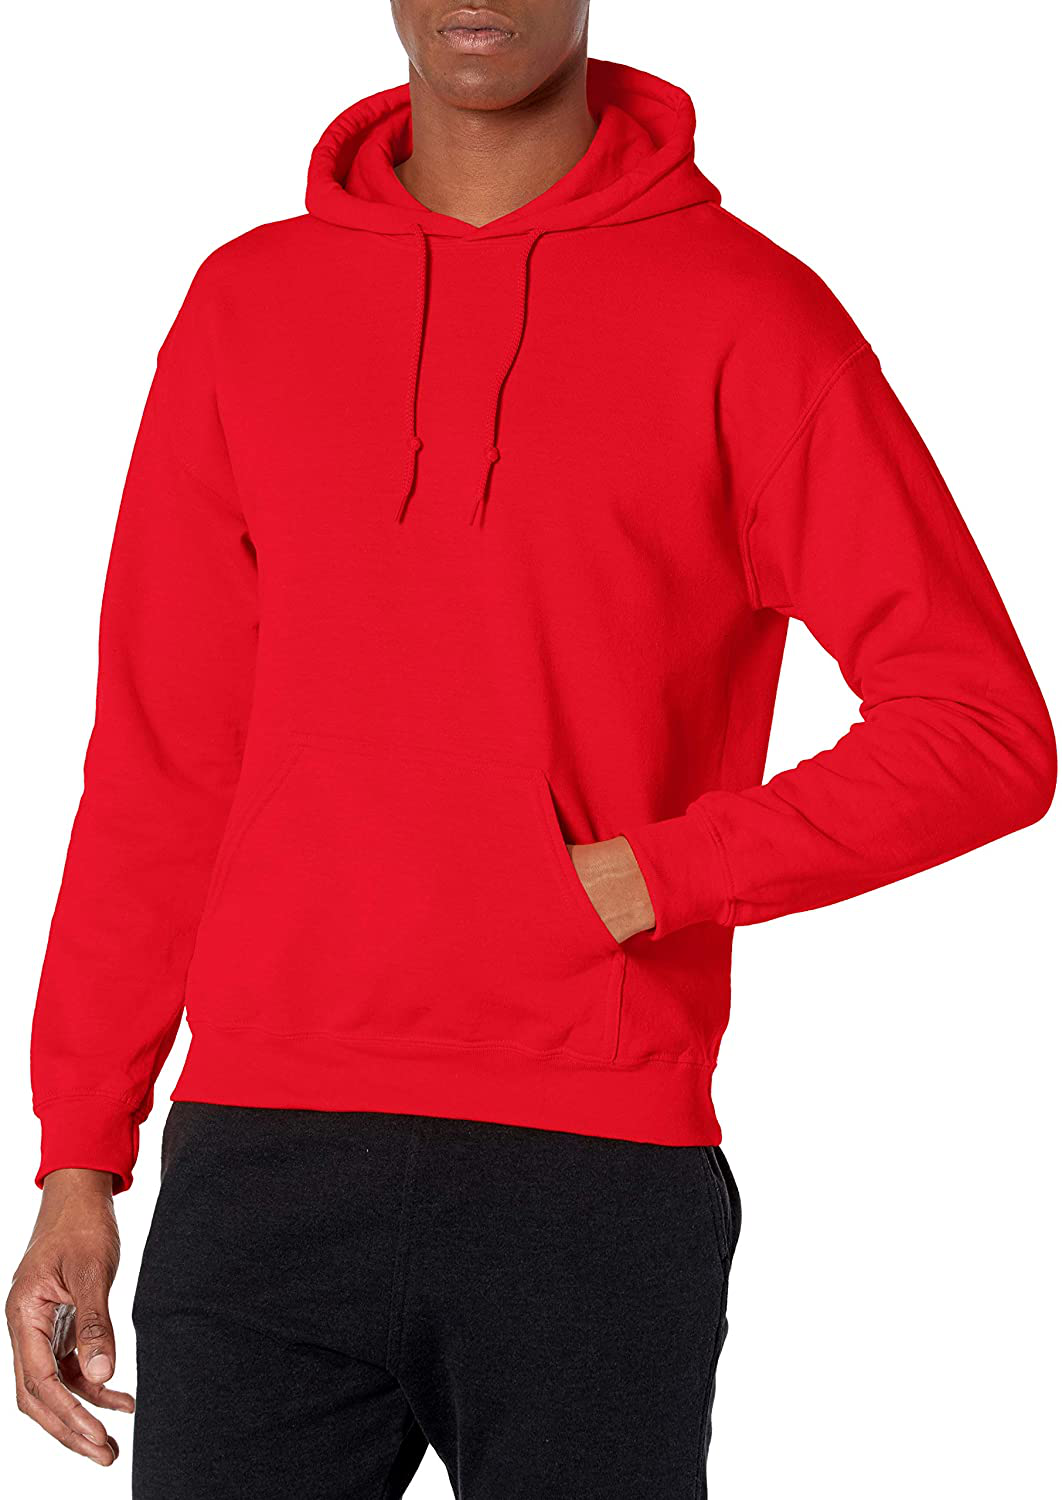 Gildan Men's Fleece Hooded Sweatshirt, Style G18500